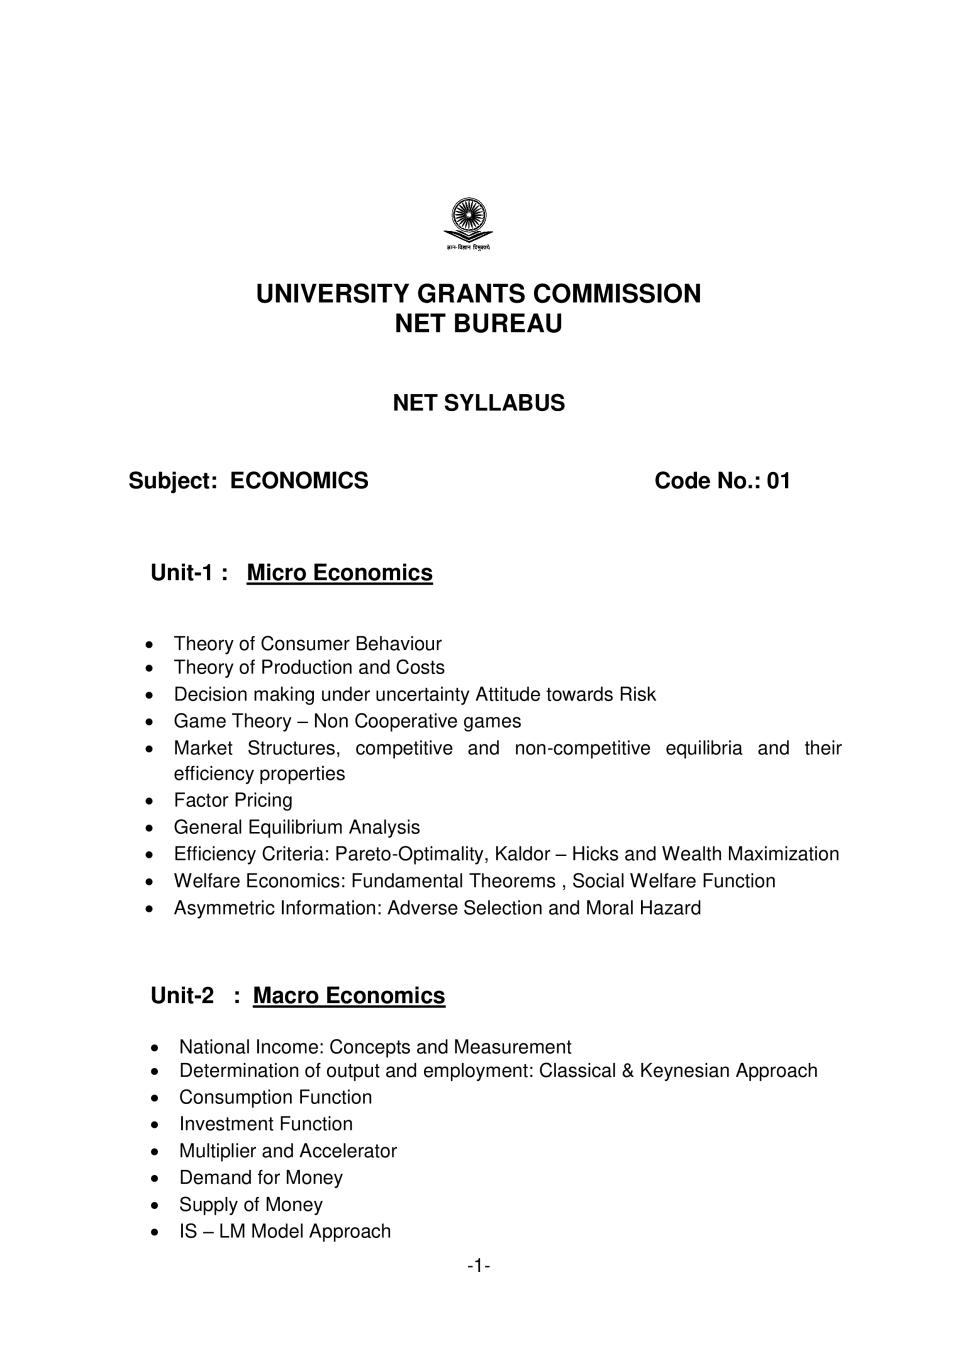 UGC NET Syllabus for Economics 2020 - Page 1